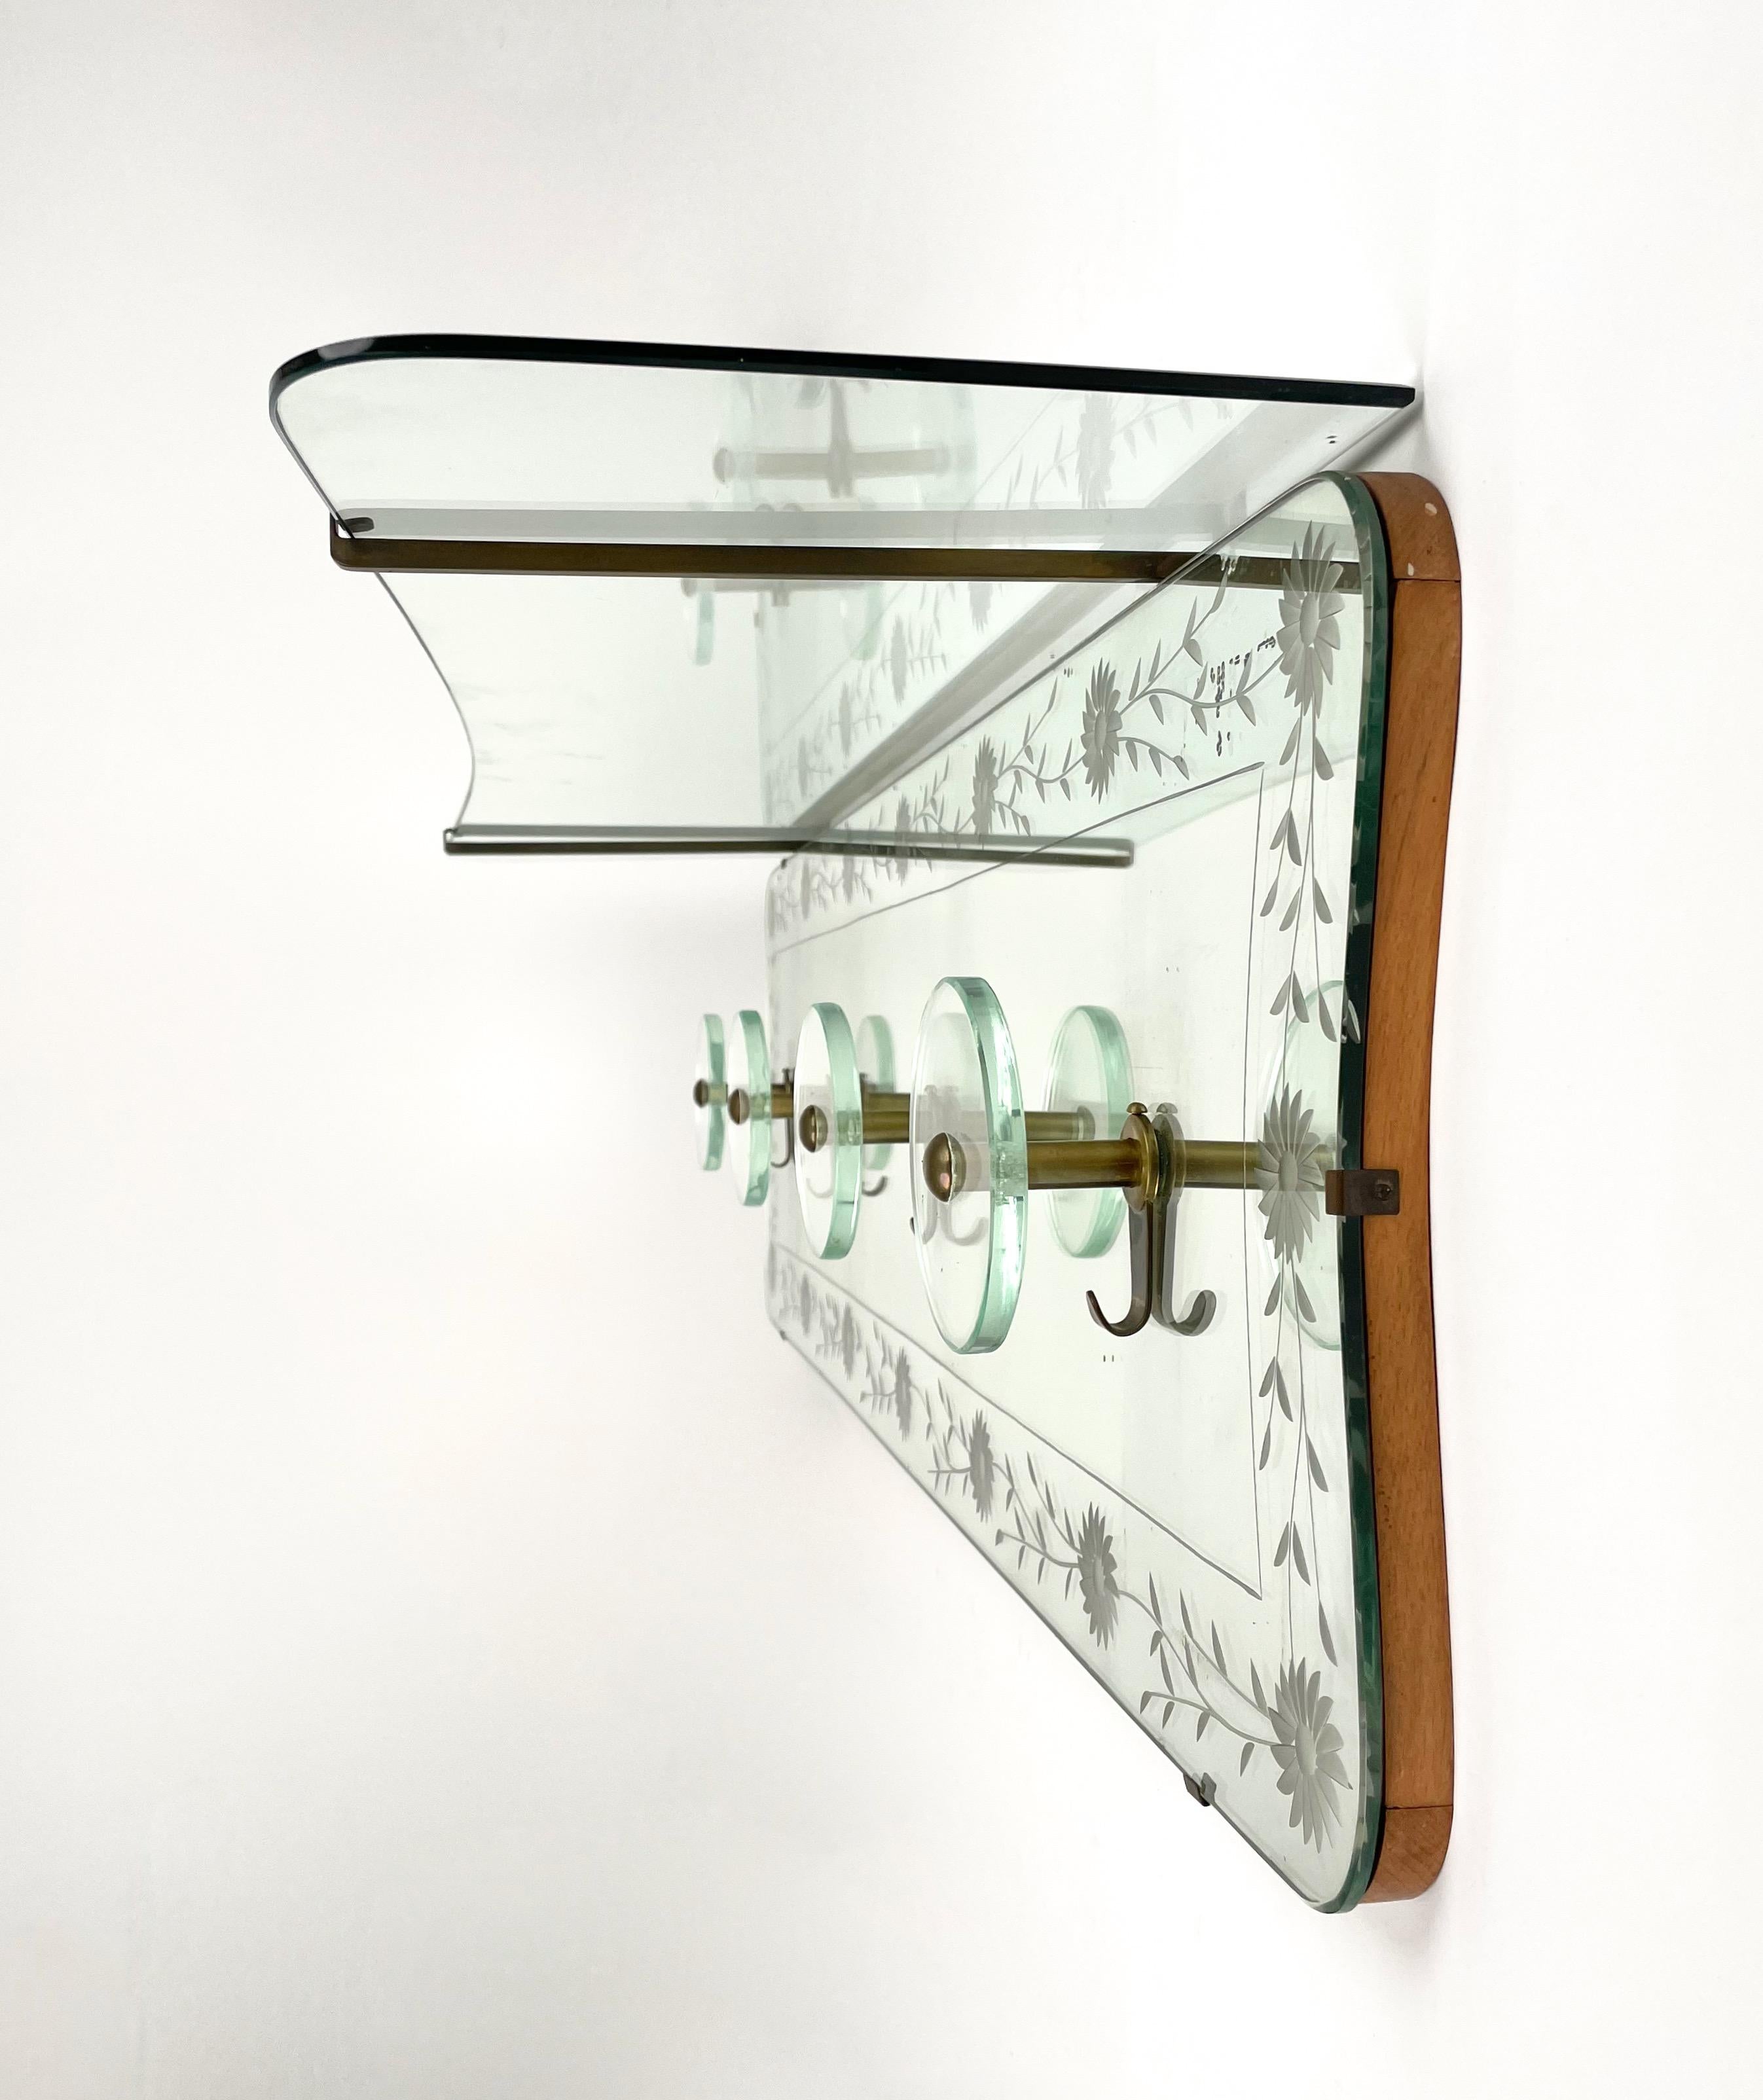 Italian Coat Rack Hanger Shelf in Mirror, Brass and Glass by Cristal Art, Italy, 1950s